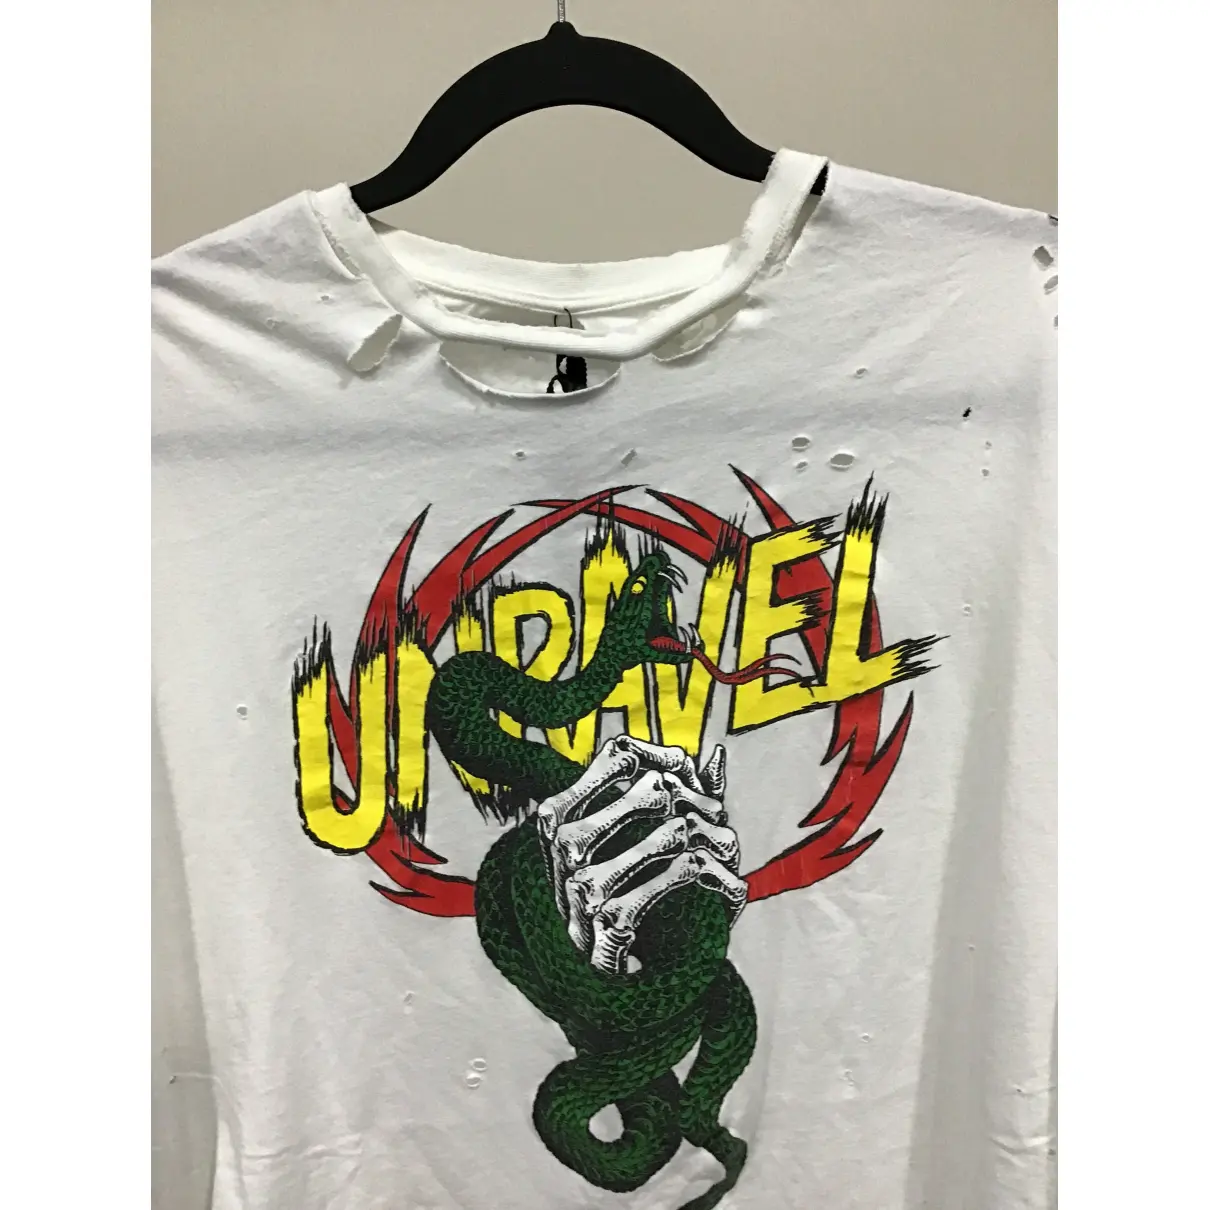 Buy Unravel Project T-shirt online